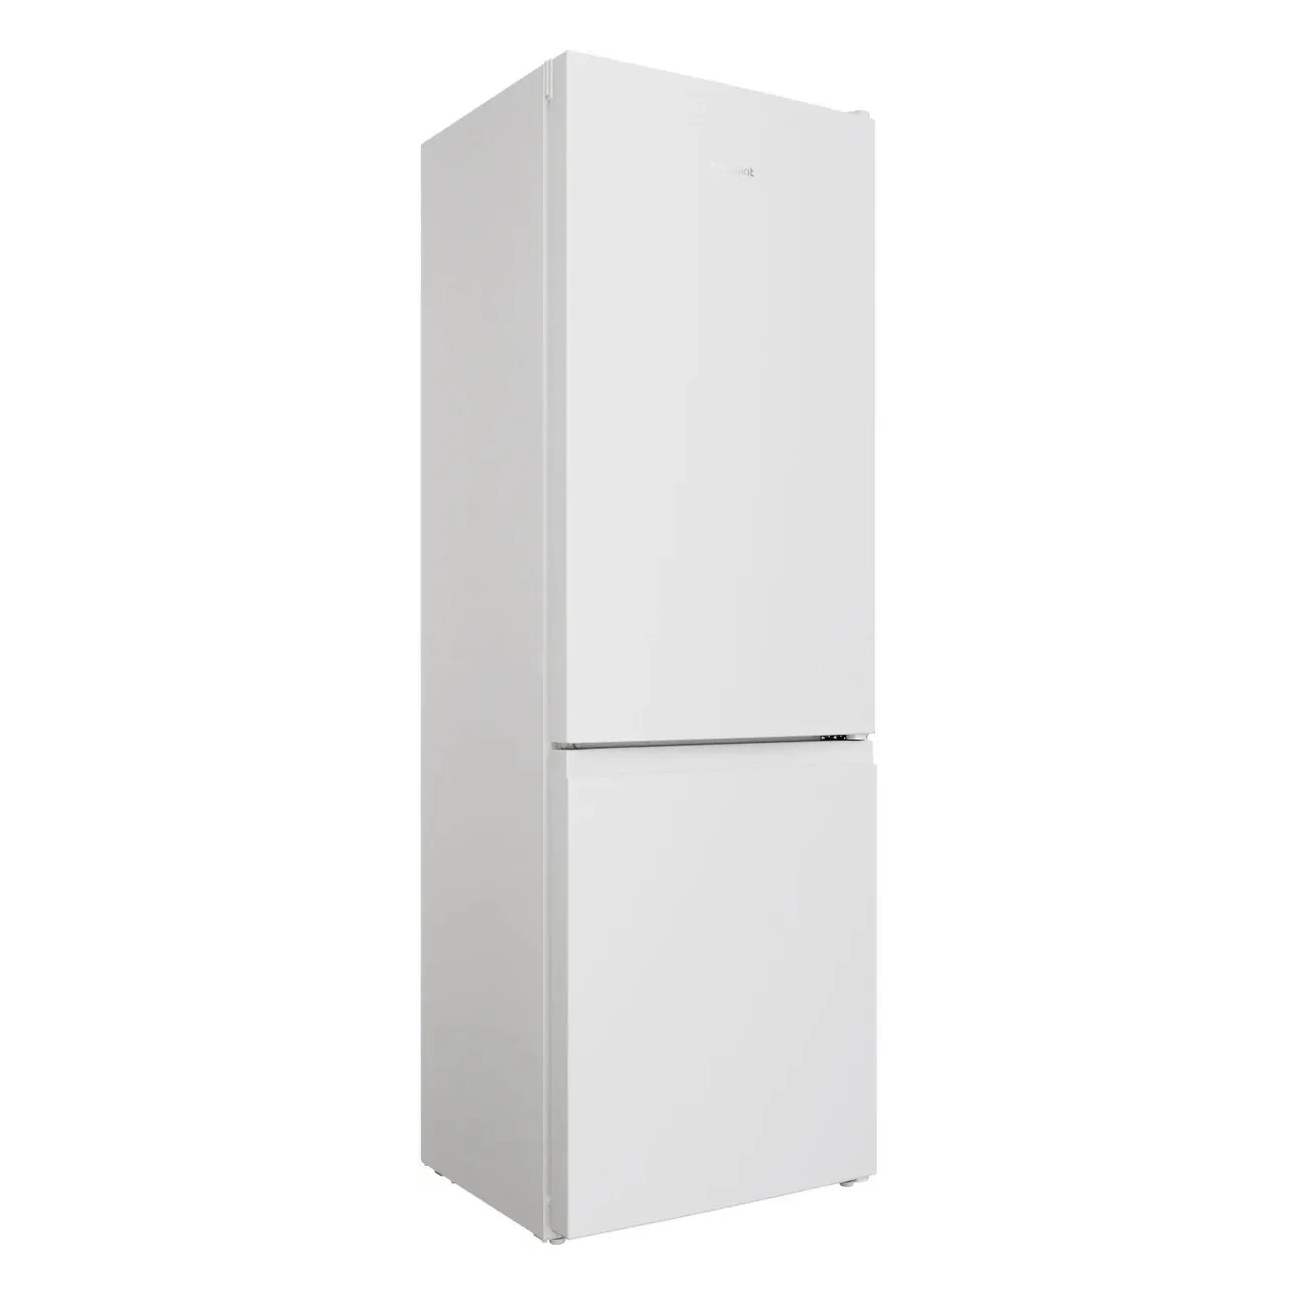 Холодильник HotPoint HT 4180 W белый, серебристый холодильник hotpoint ht 4180 s